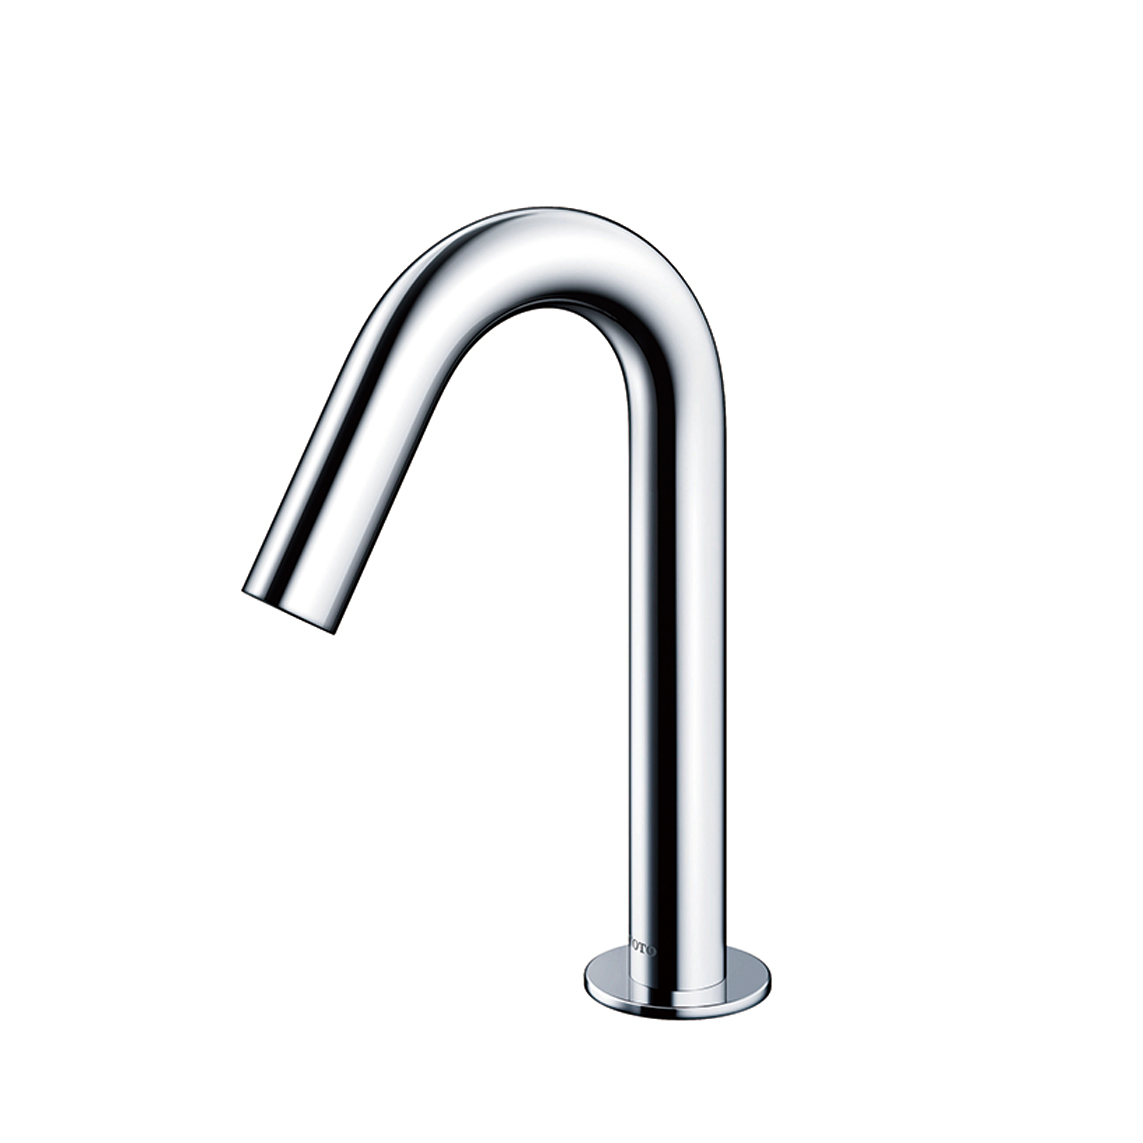 Faucet／パブリック手洗い用水栓